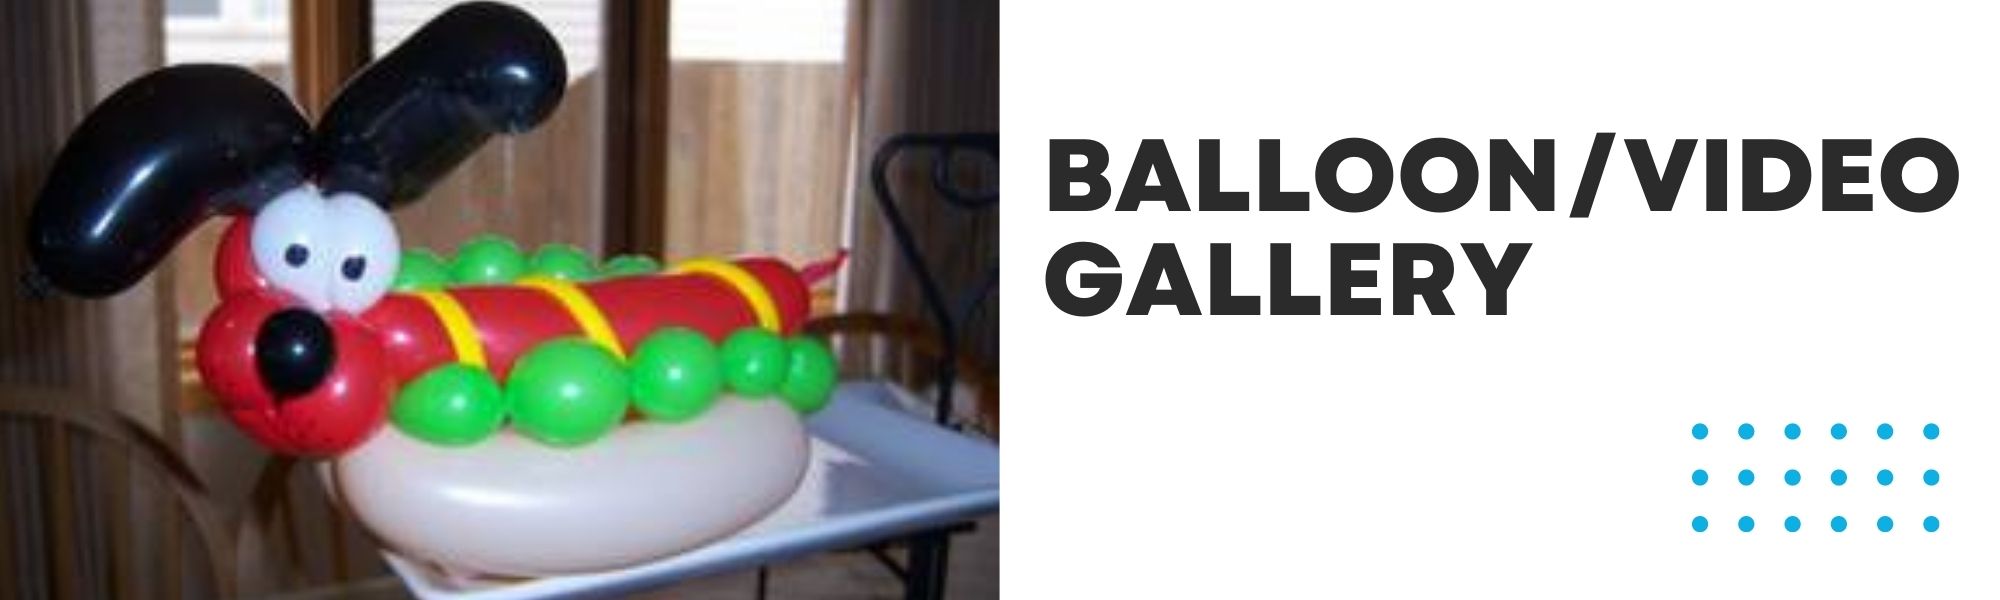 Balloon Video Gallery Banner